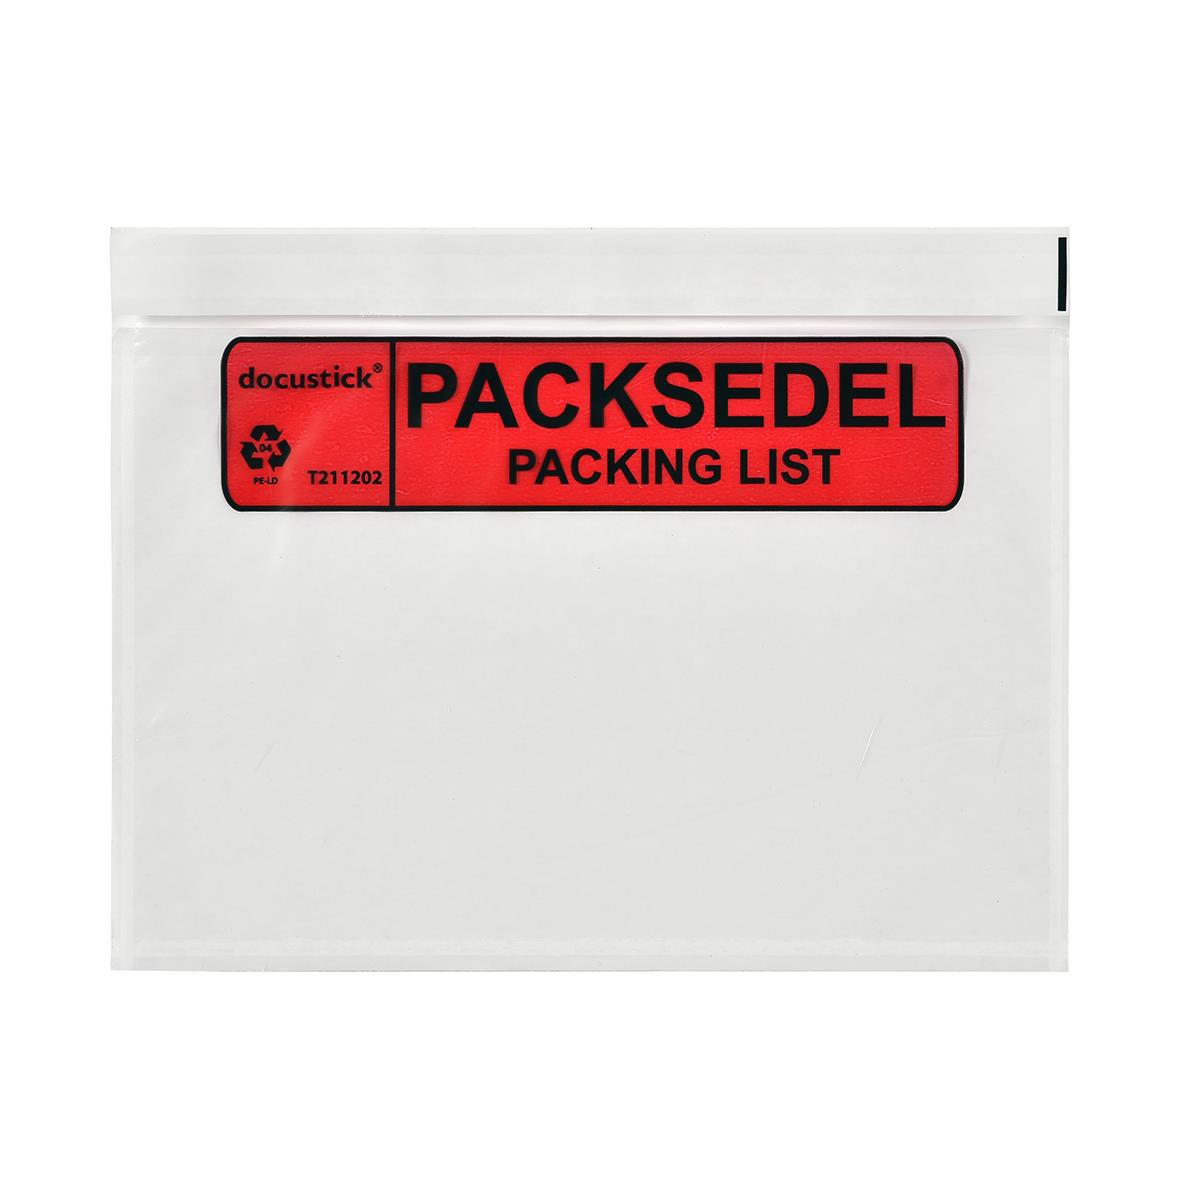 Packsedelskuvert extra kraftig med tryck C5 14070045